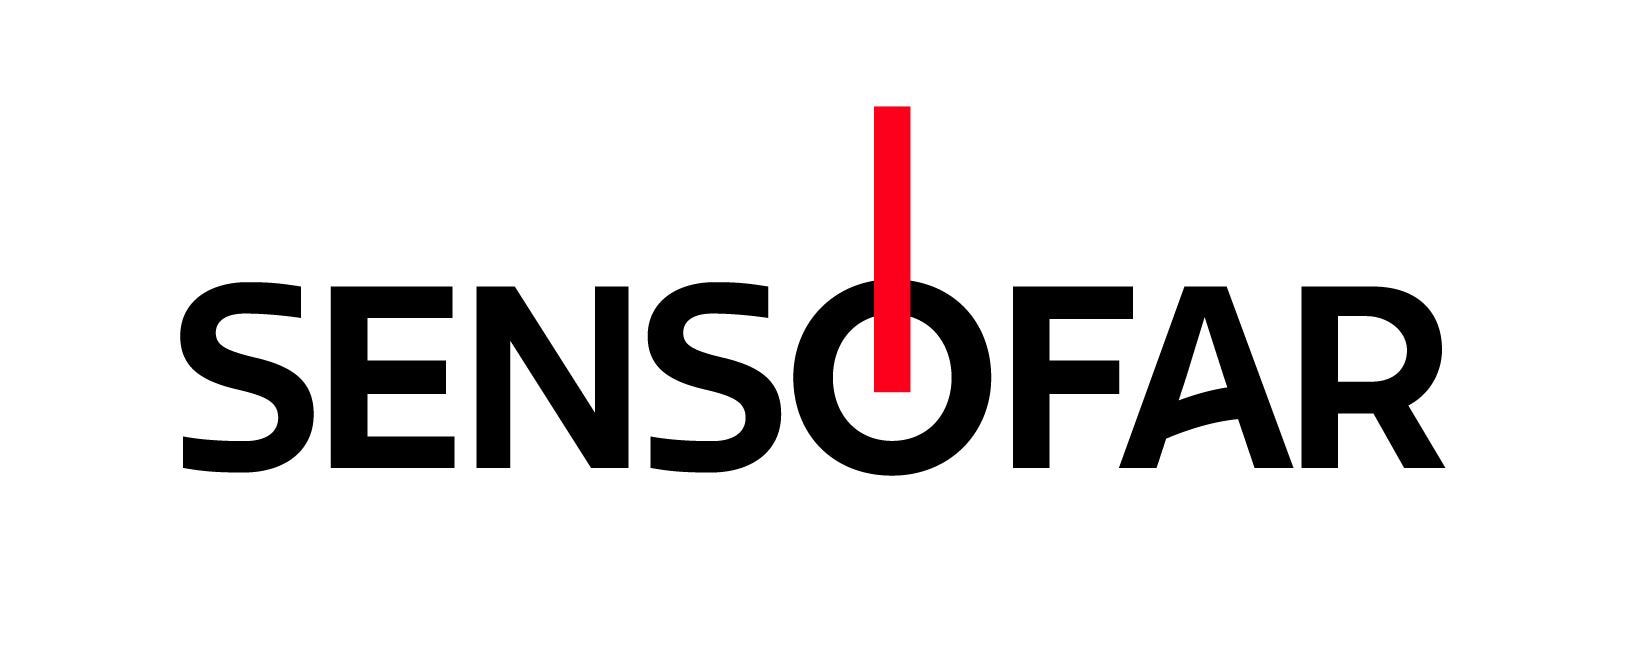 Sensofar Metrology logo.